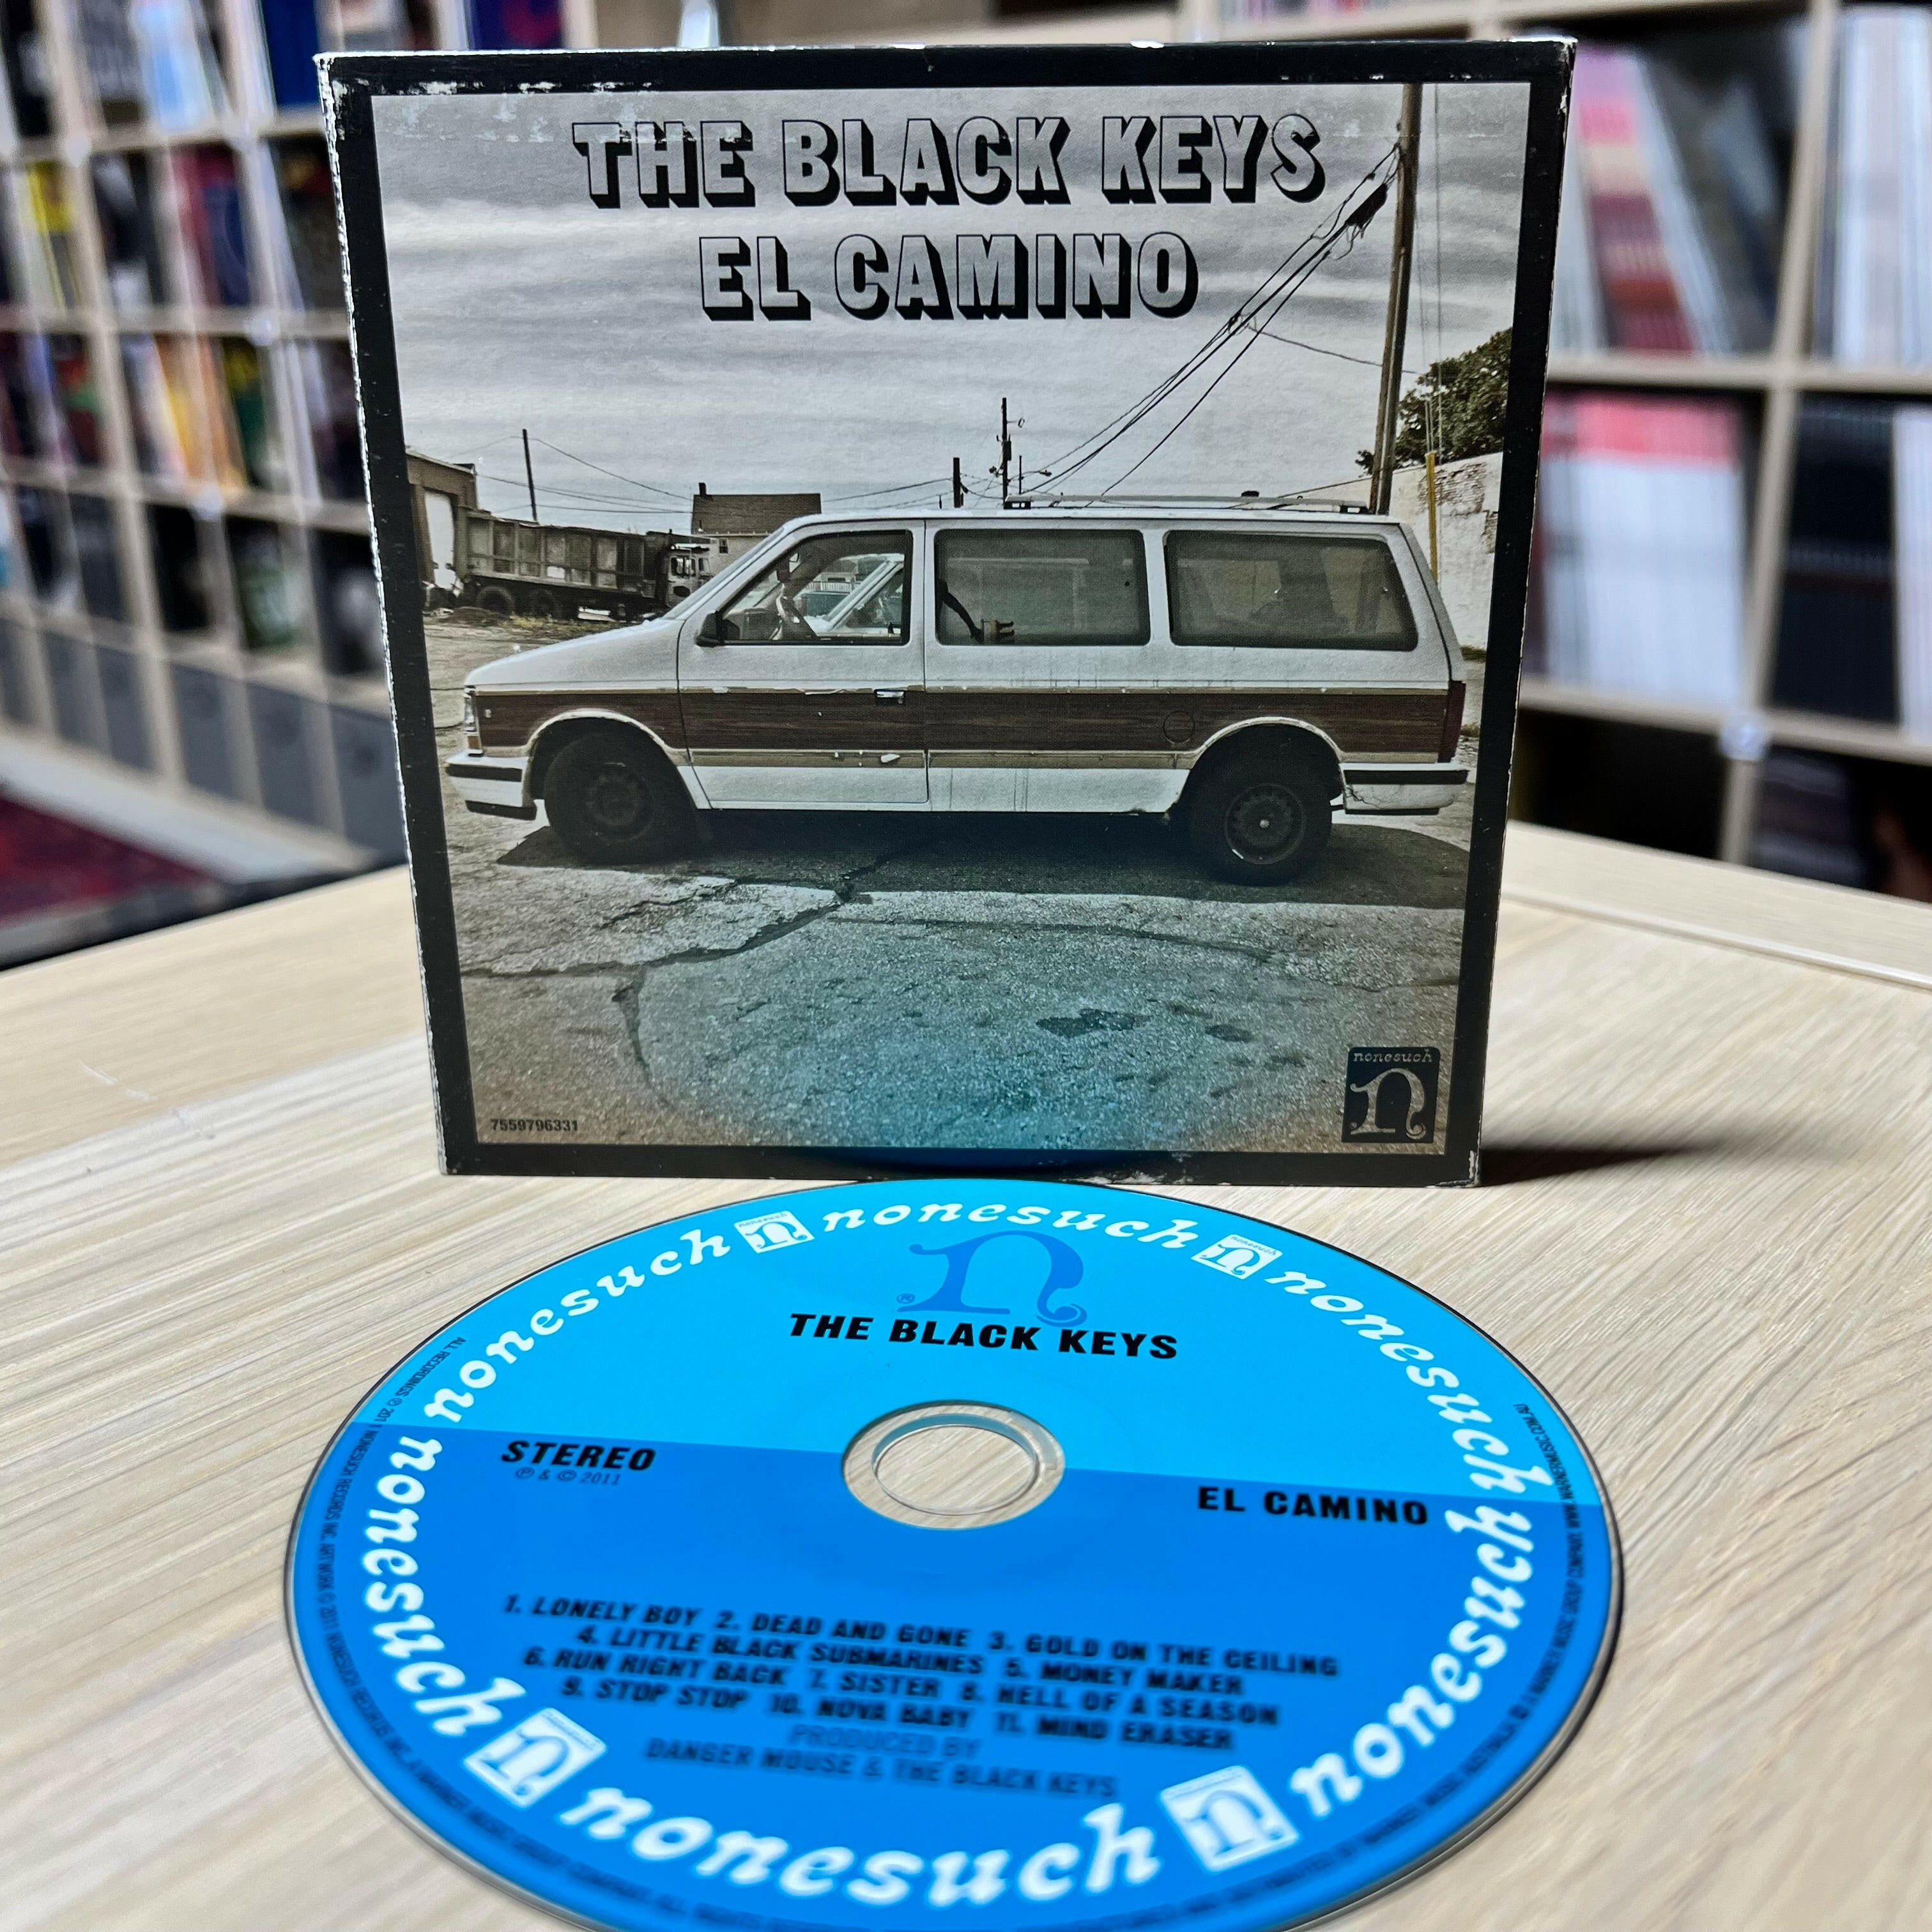 El Camino (2CD Australian Tour Edition) by Black Keys: .co